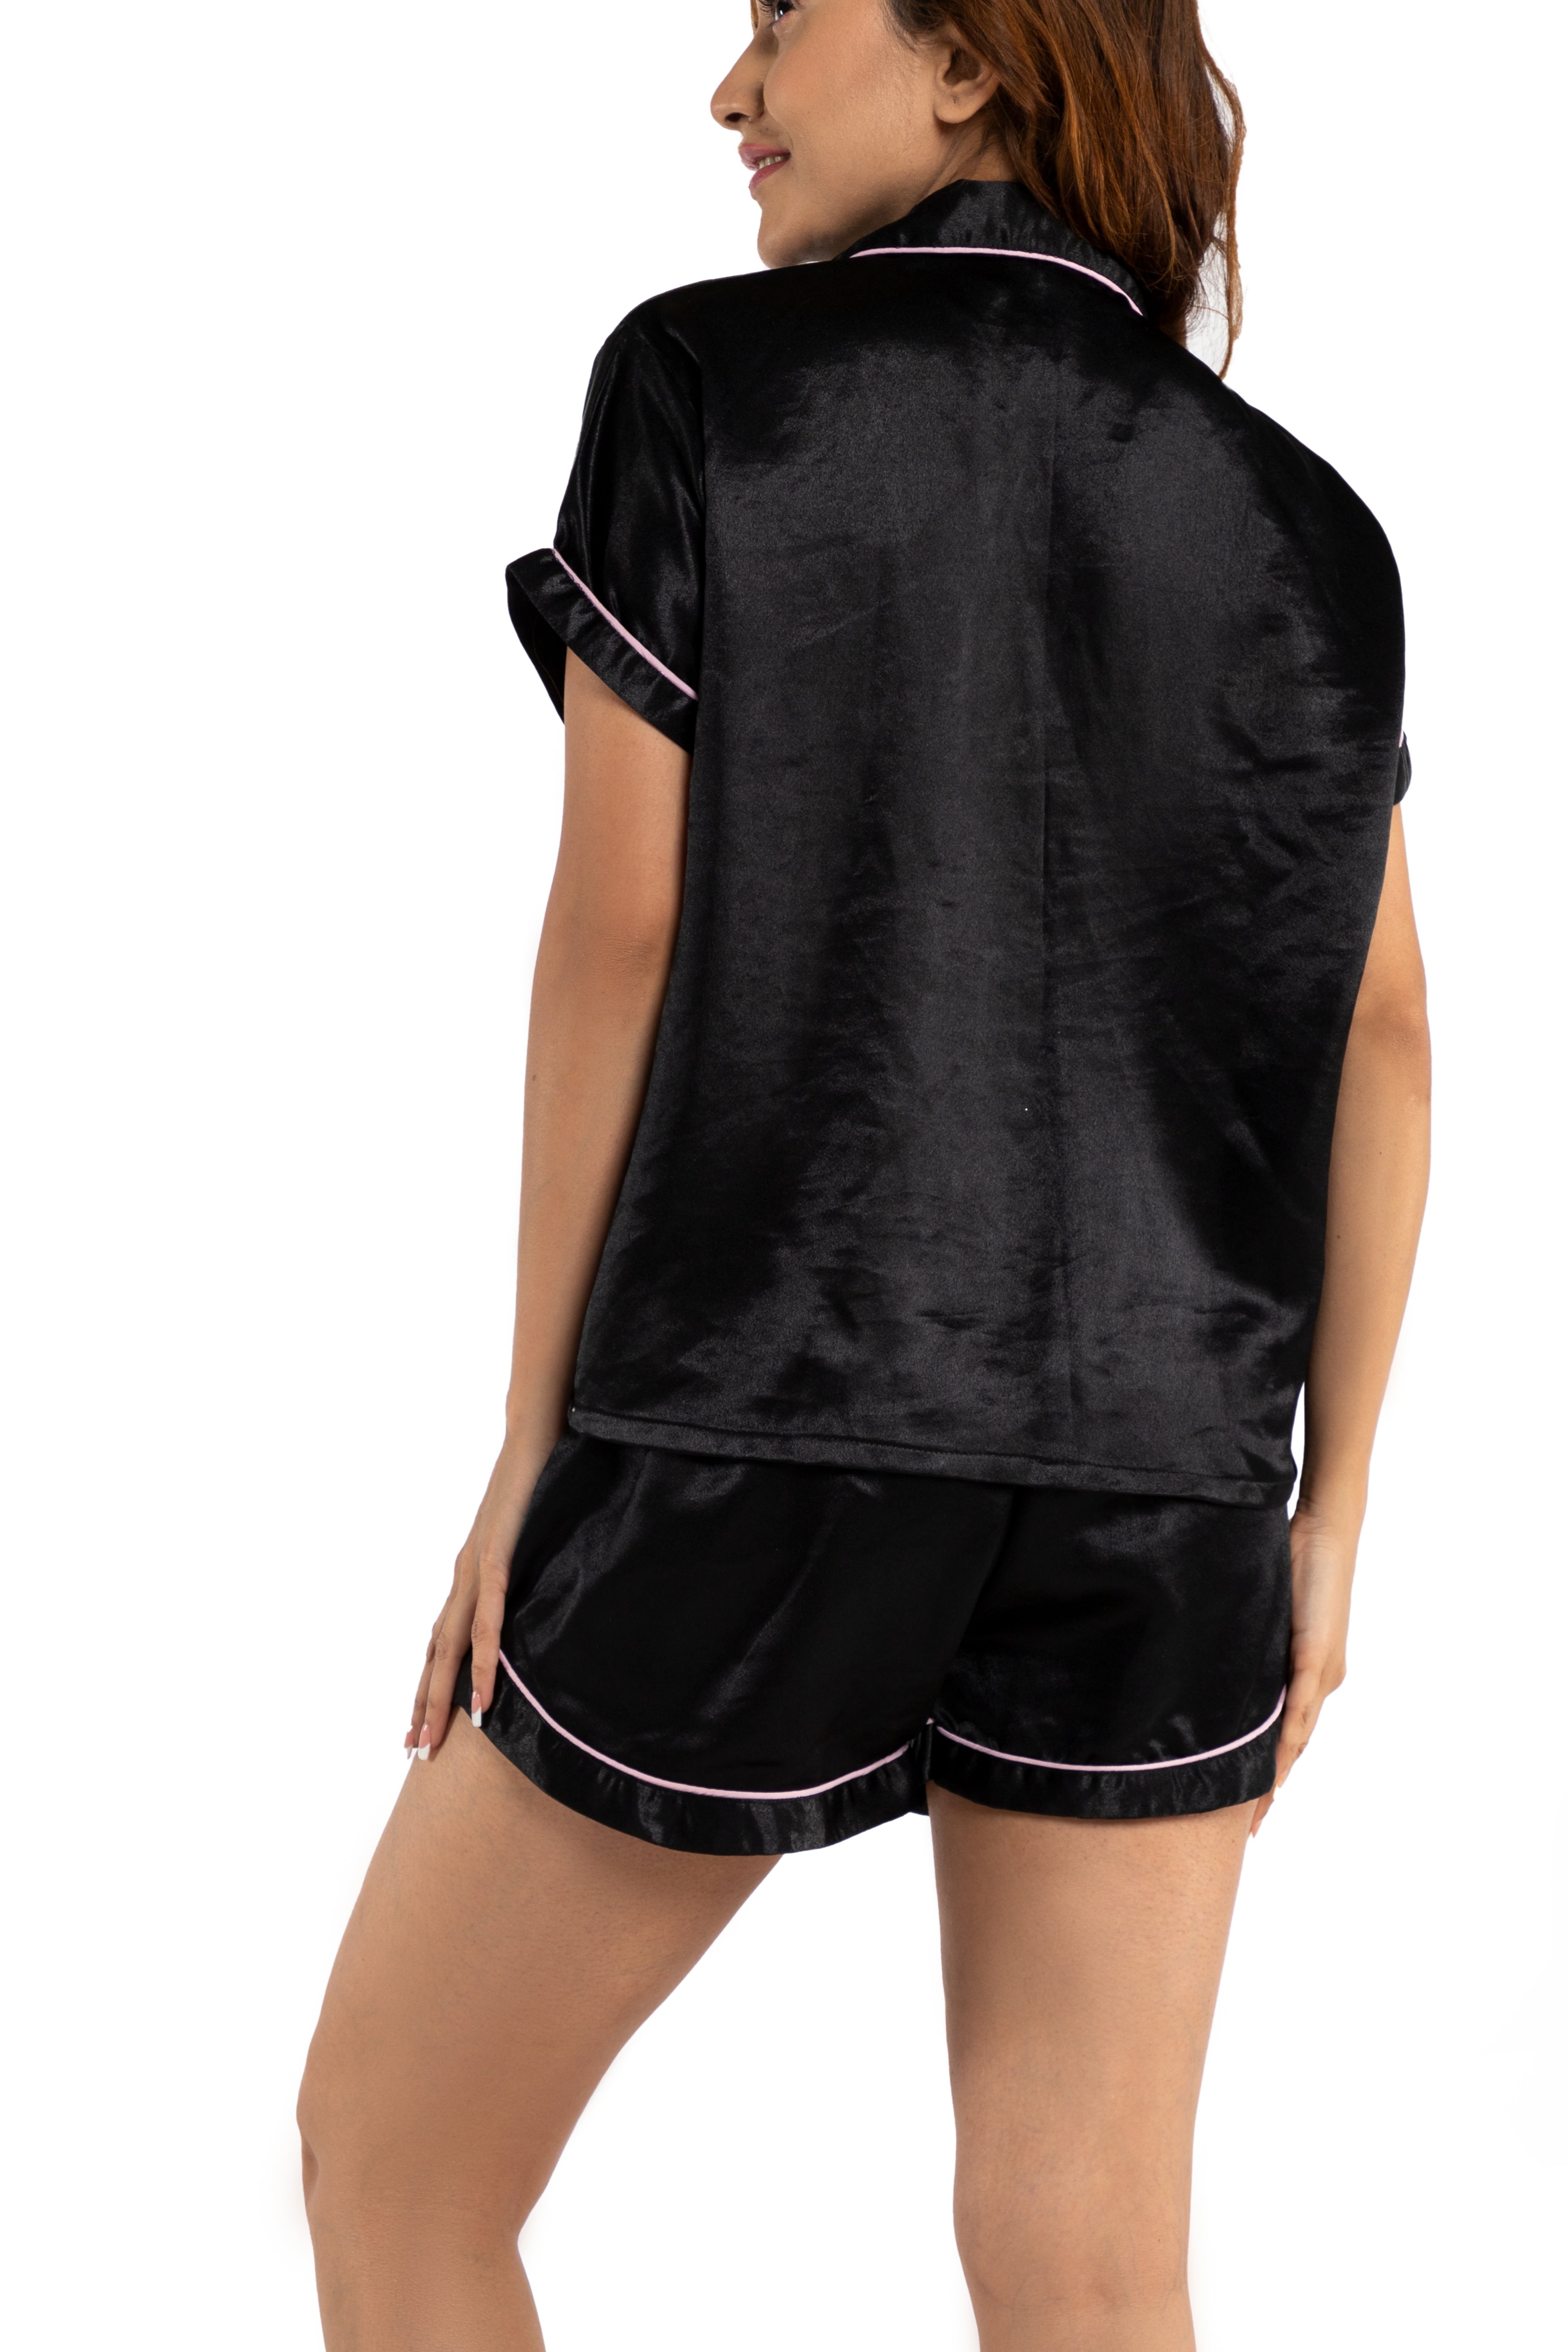 Black Short Length Satin Nightwear Set